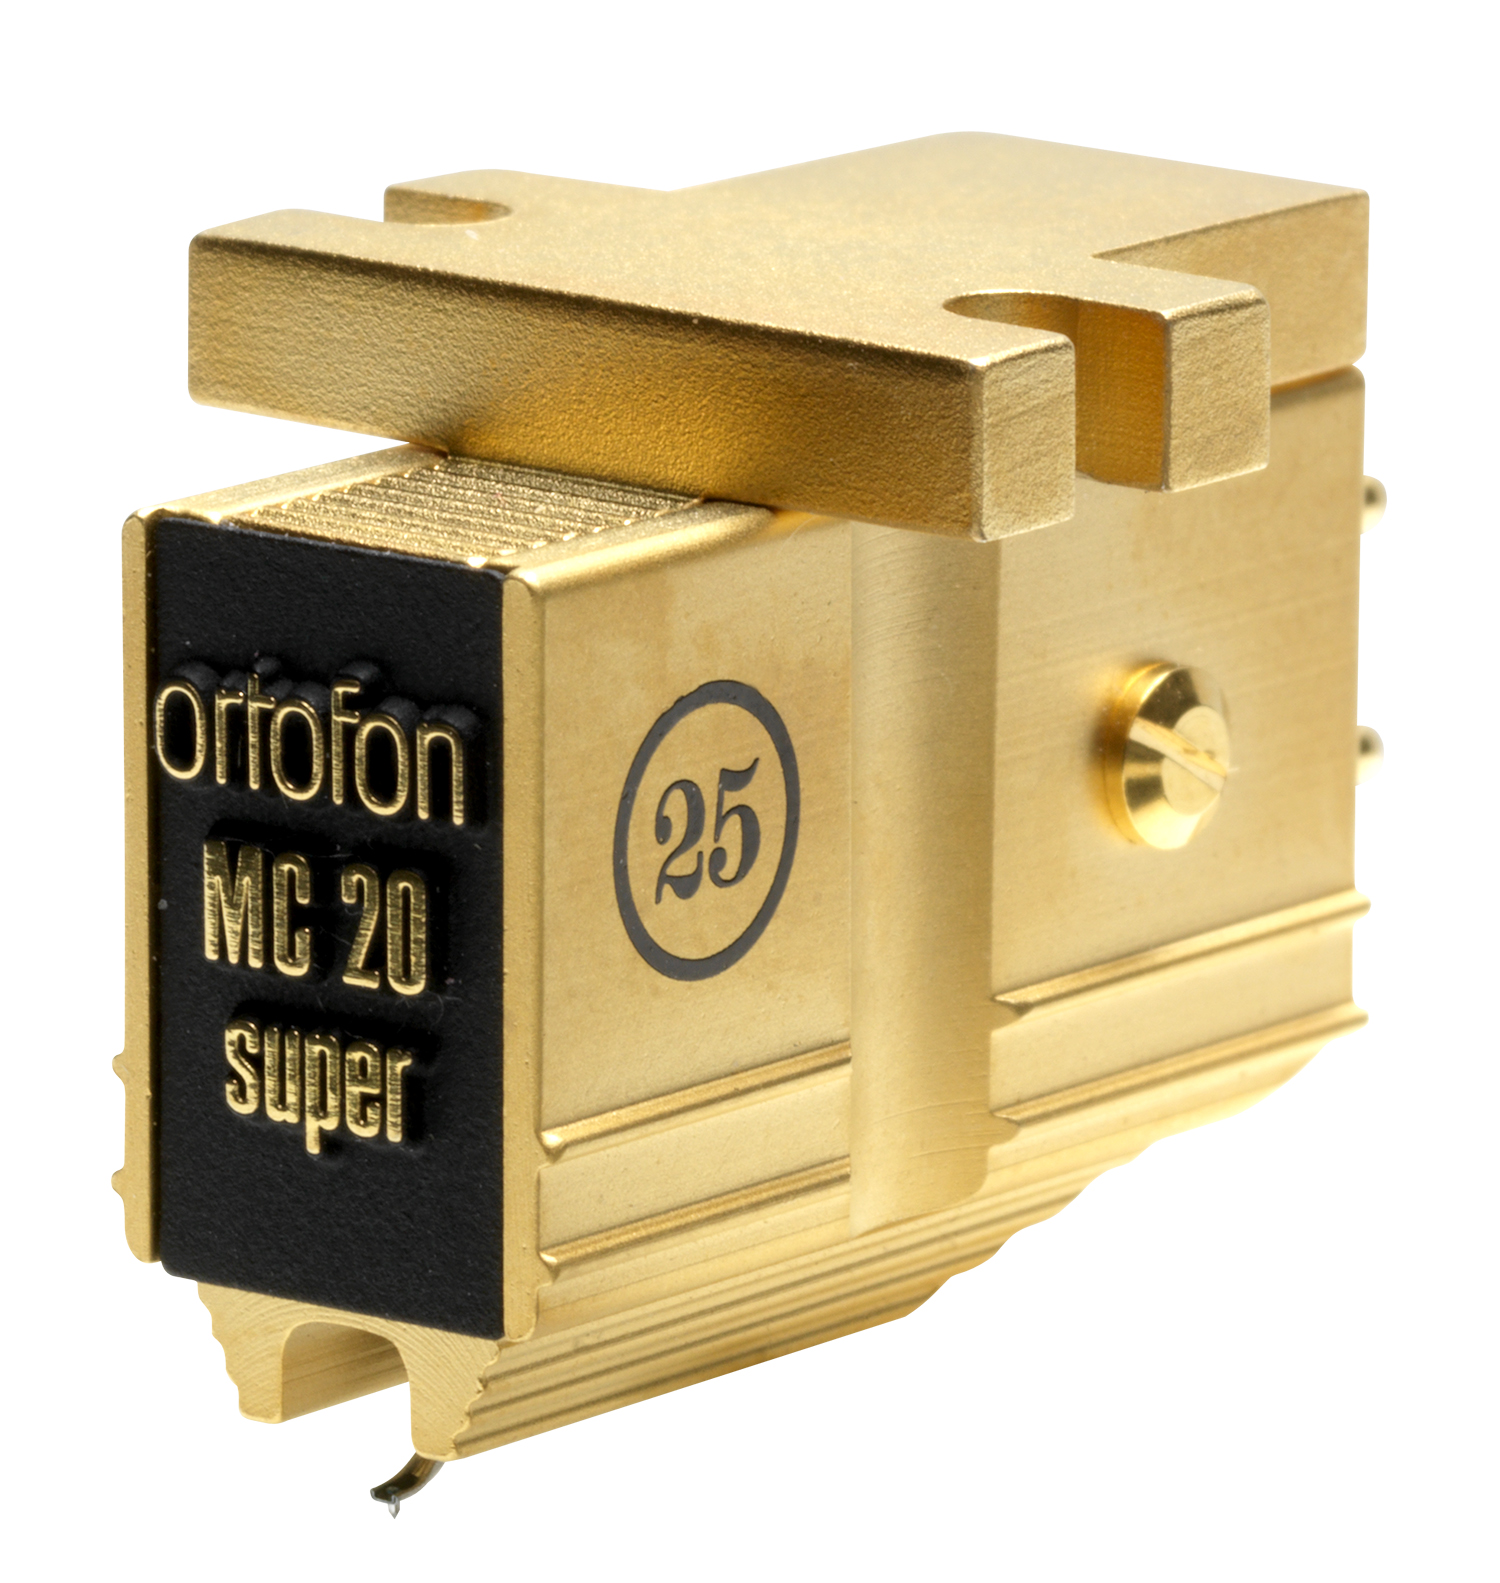 Ortofon MC 20 Super Special Edition Cartridge